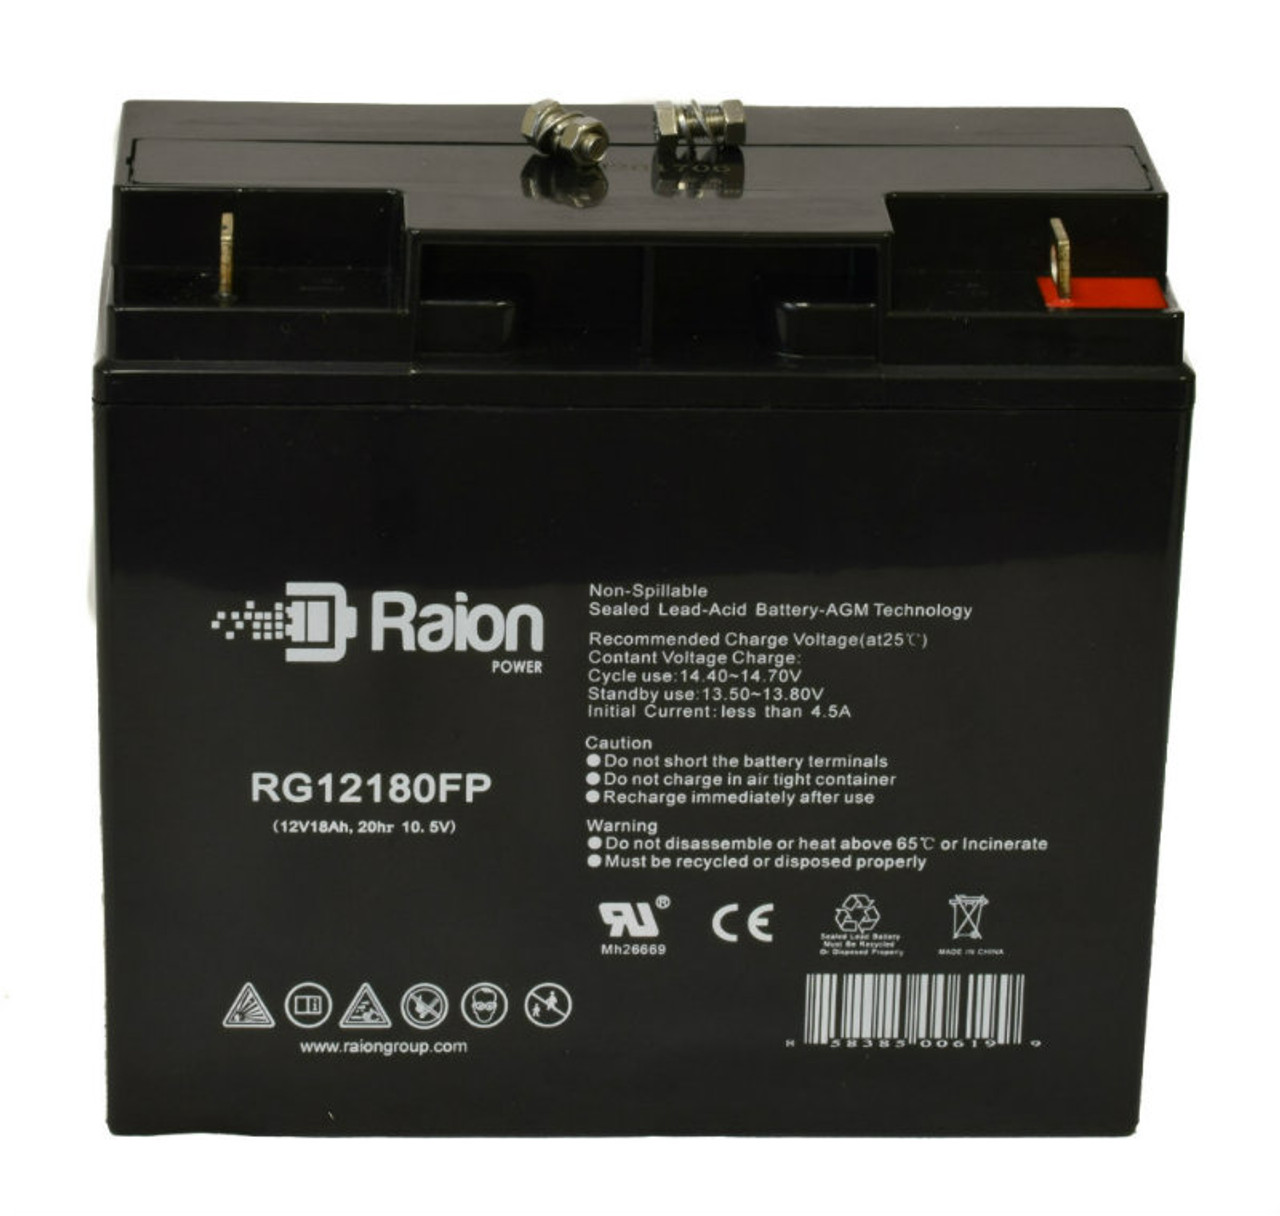 Raion Power RG12180FP 12V 18Ah Lead Acid Battery for Remco RM12-17